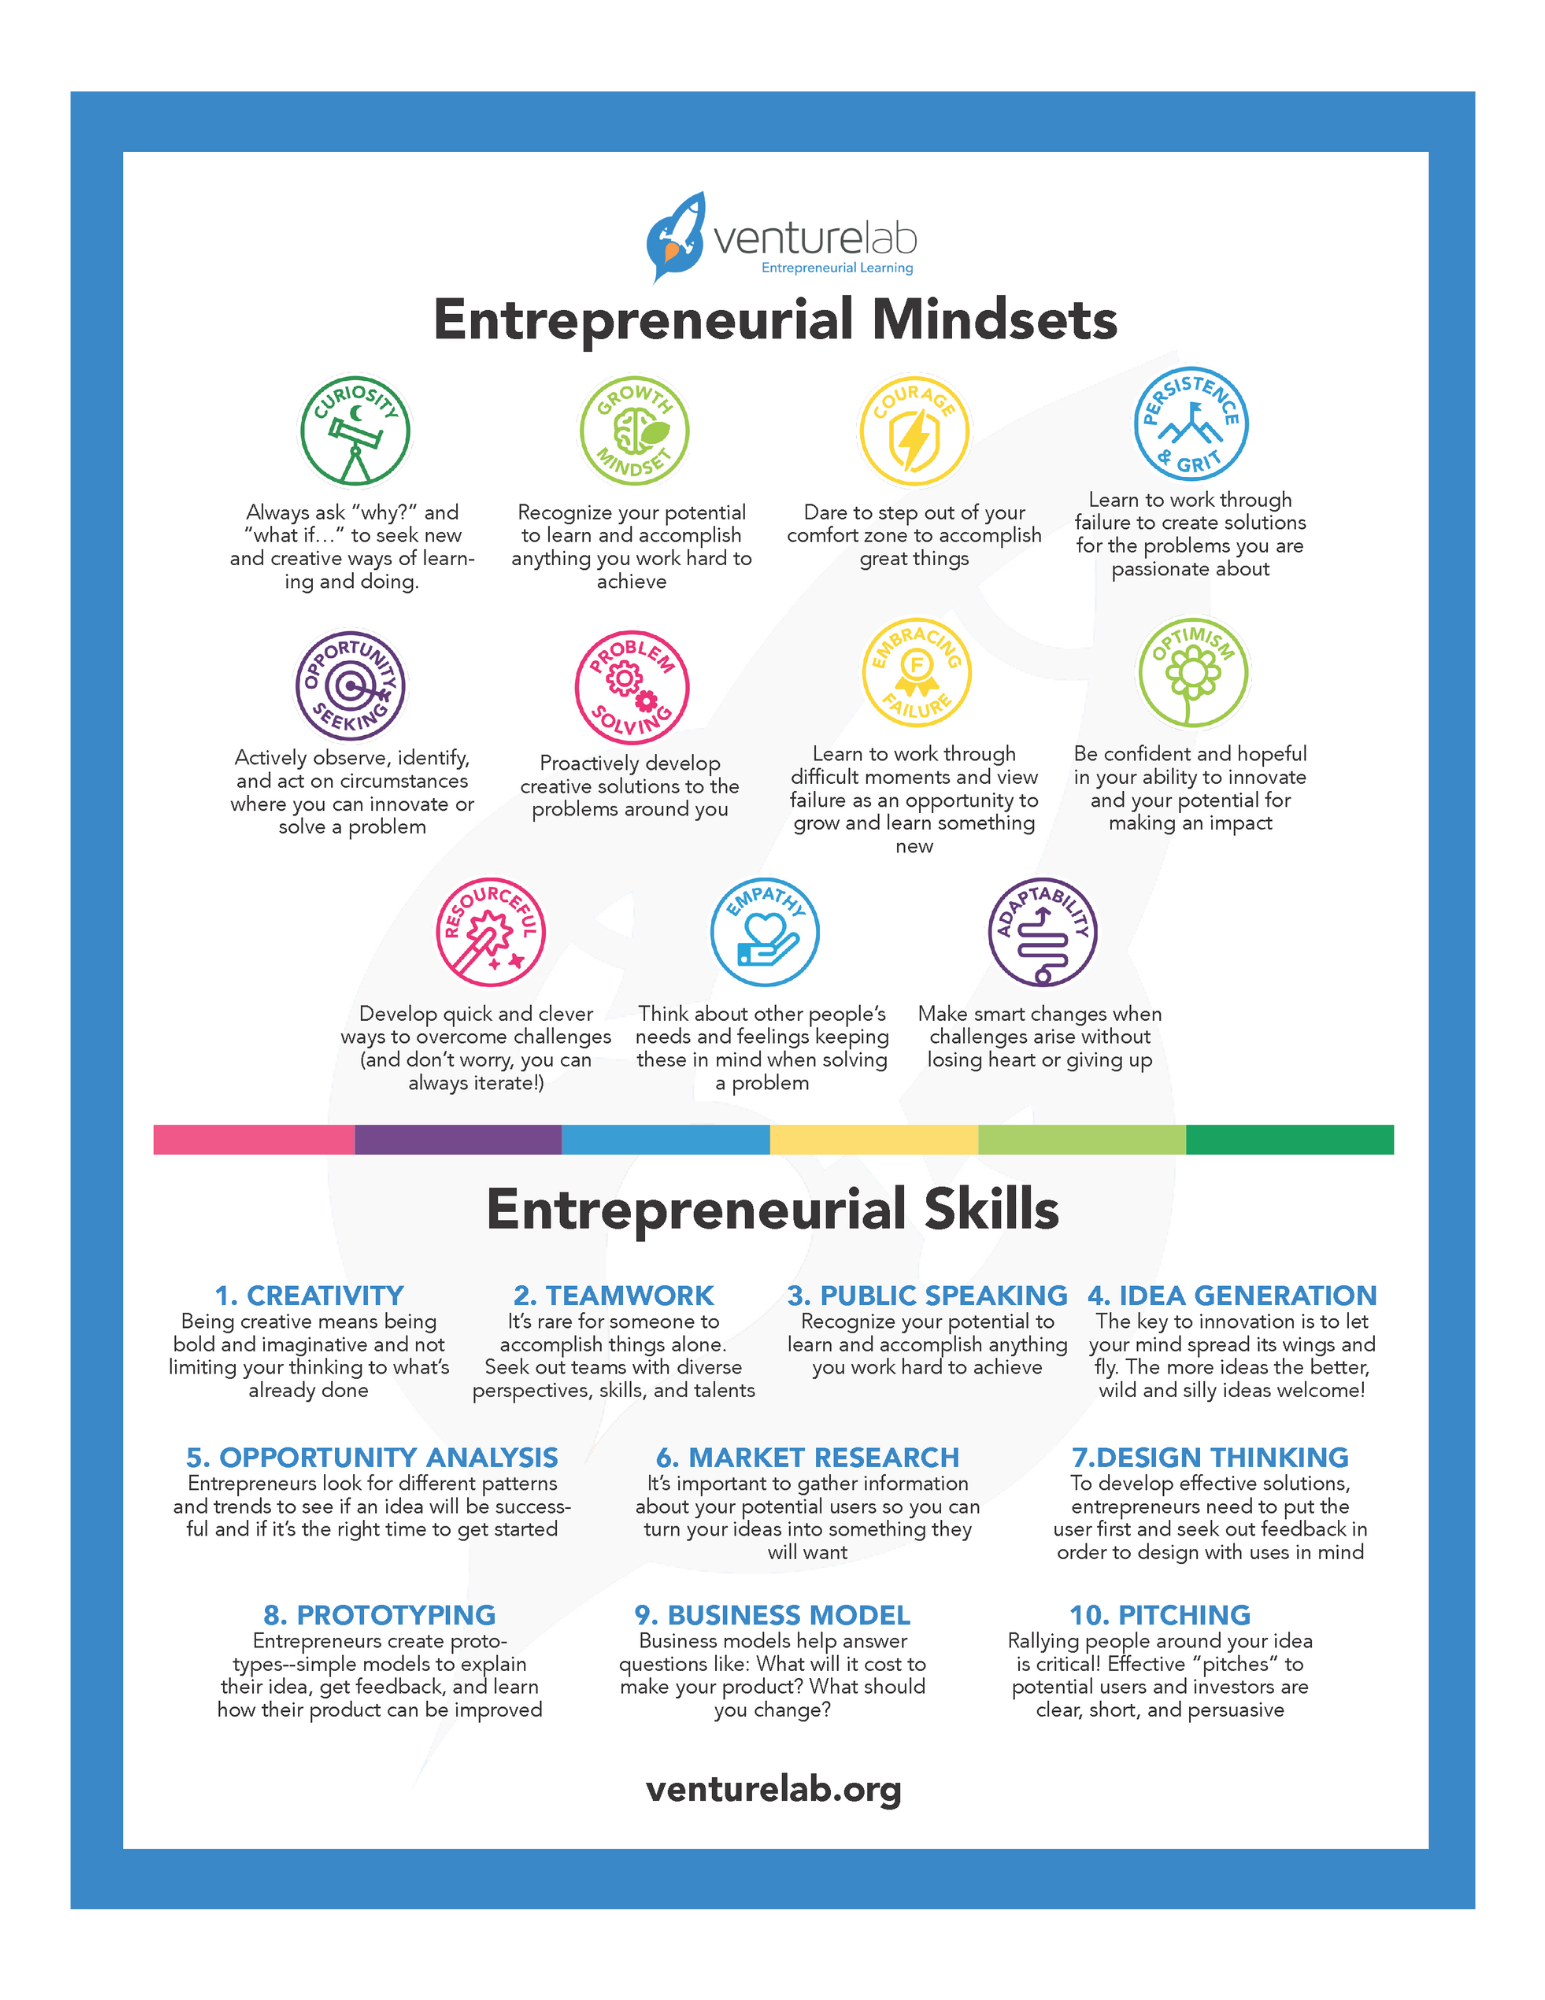 VentureLab Entrepreneurial Mindset Poster Grades 6-12, size 8.5x11